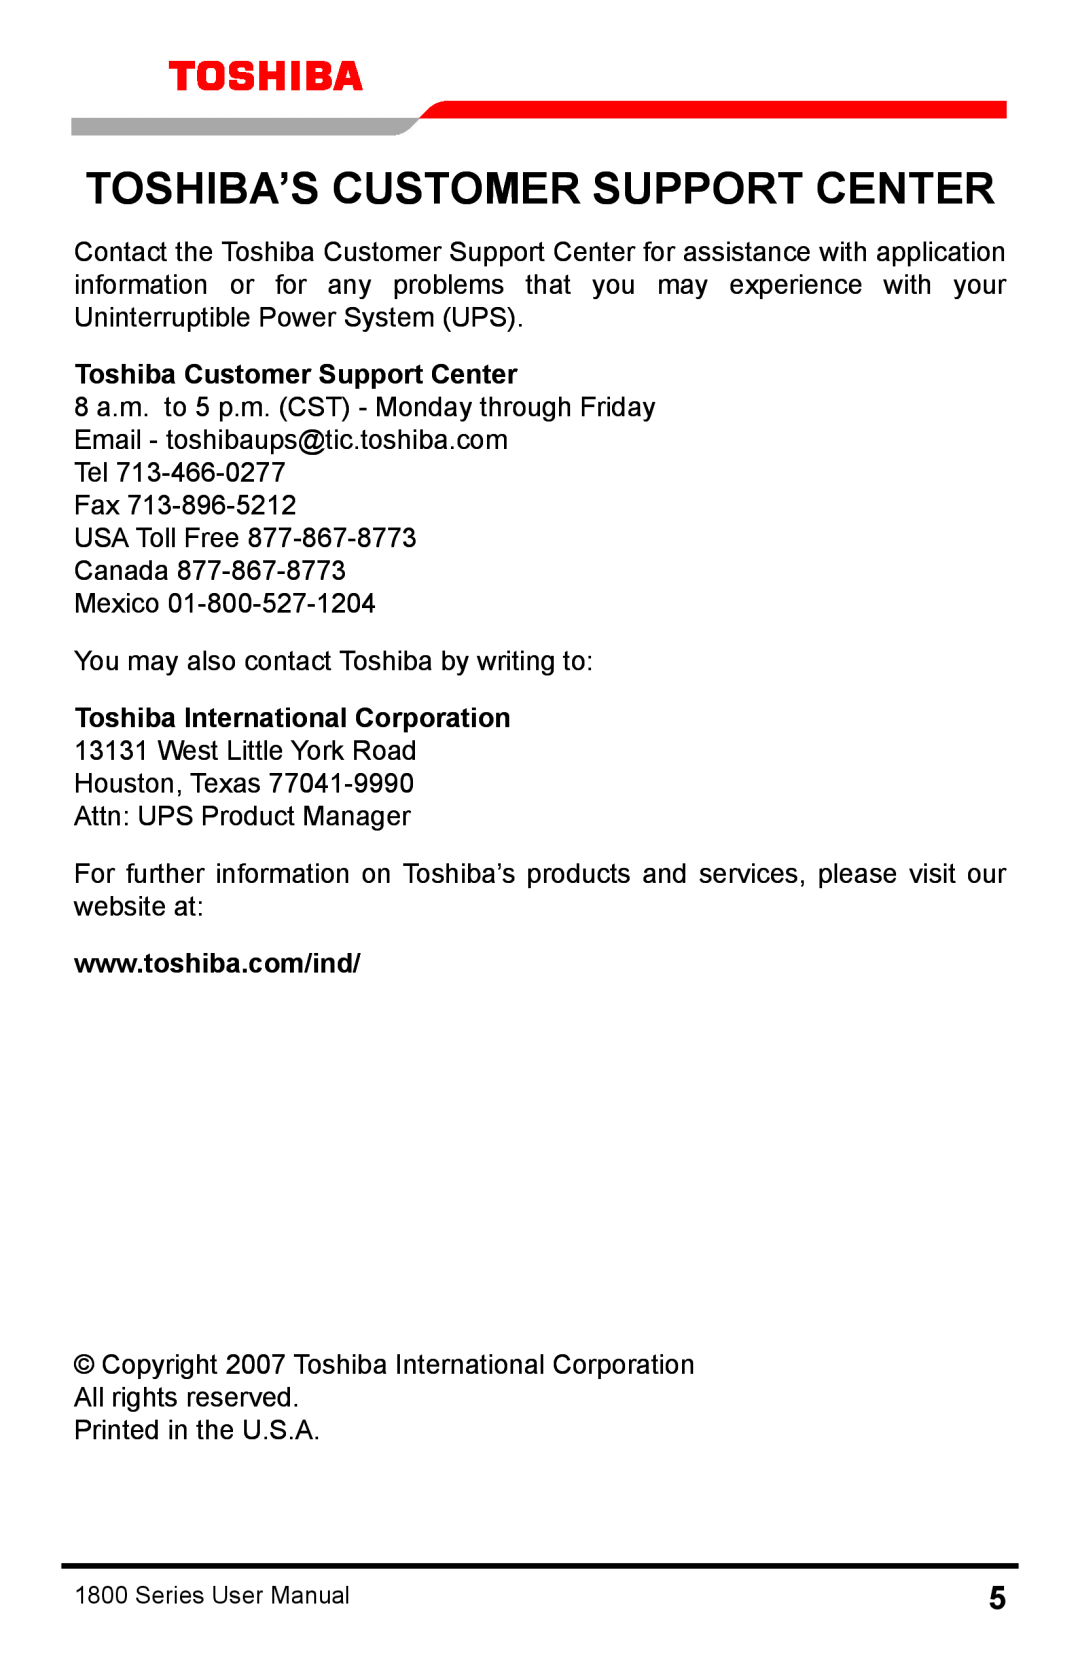 Toshiba 1800 manual Toshiba’s Customer Support Center, Toshiba Customer Support Center, Toshiba International Corporation 